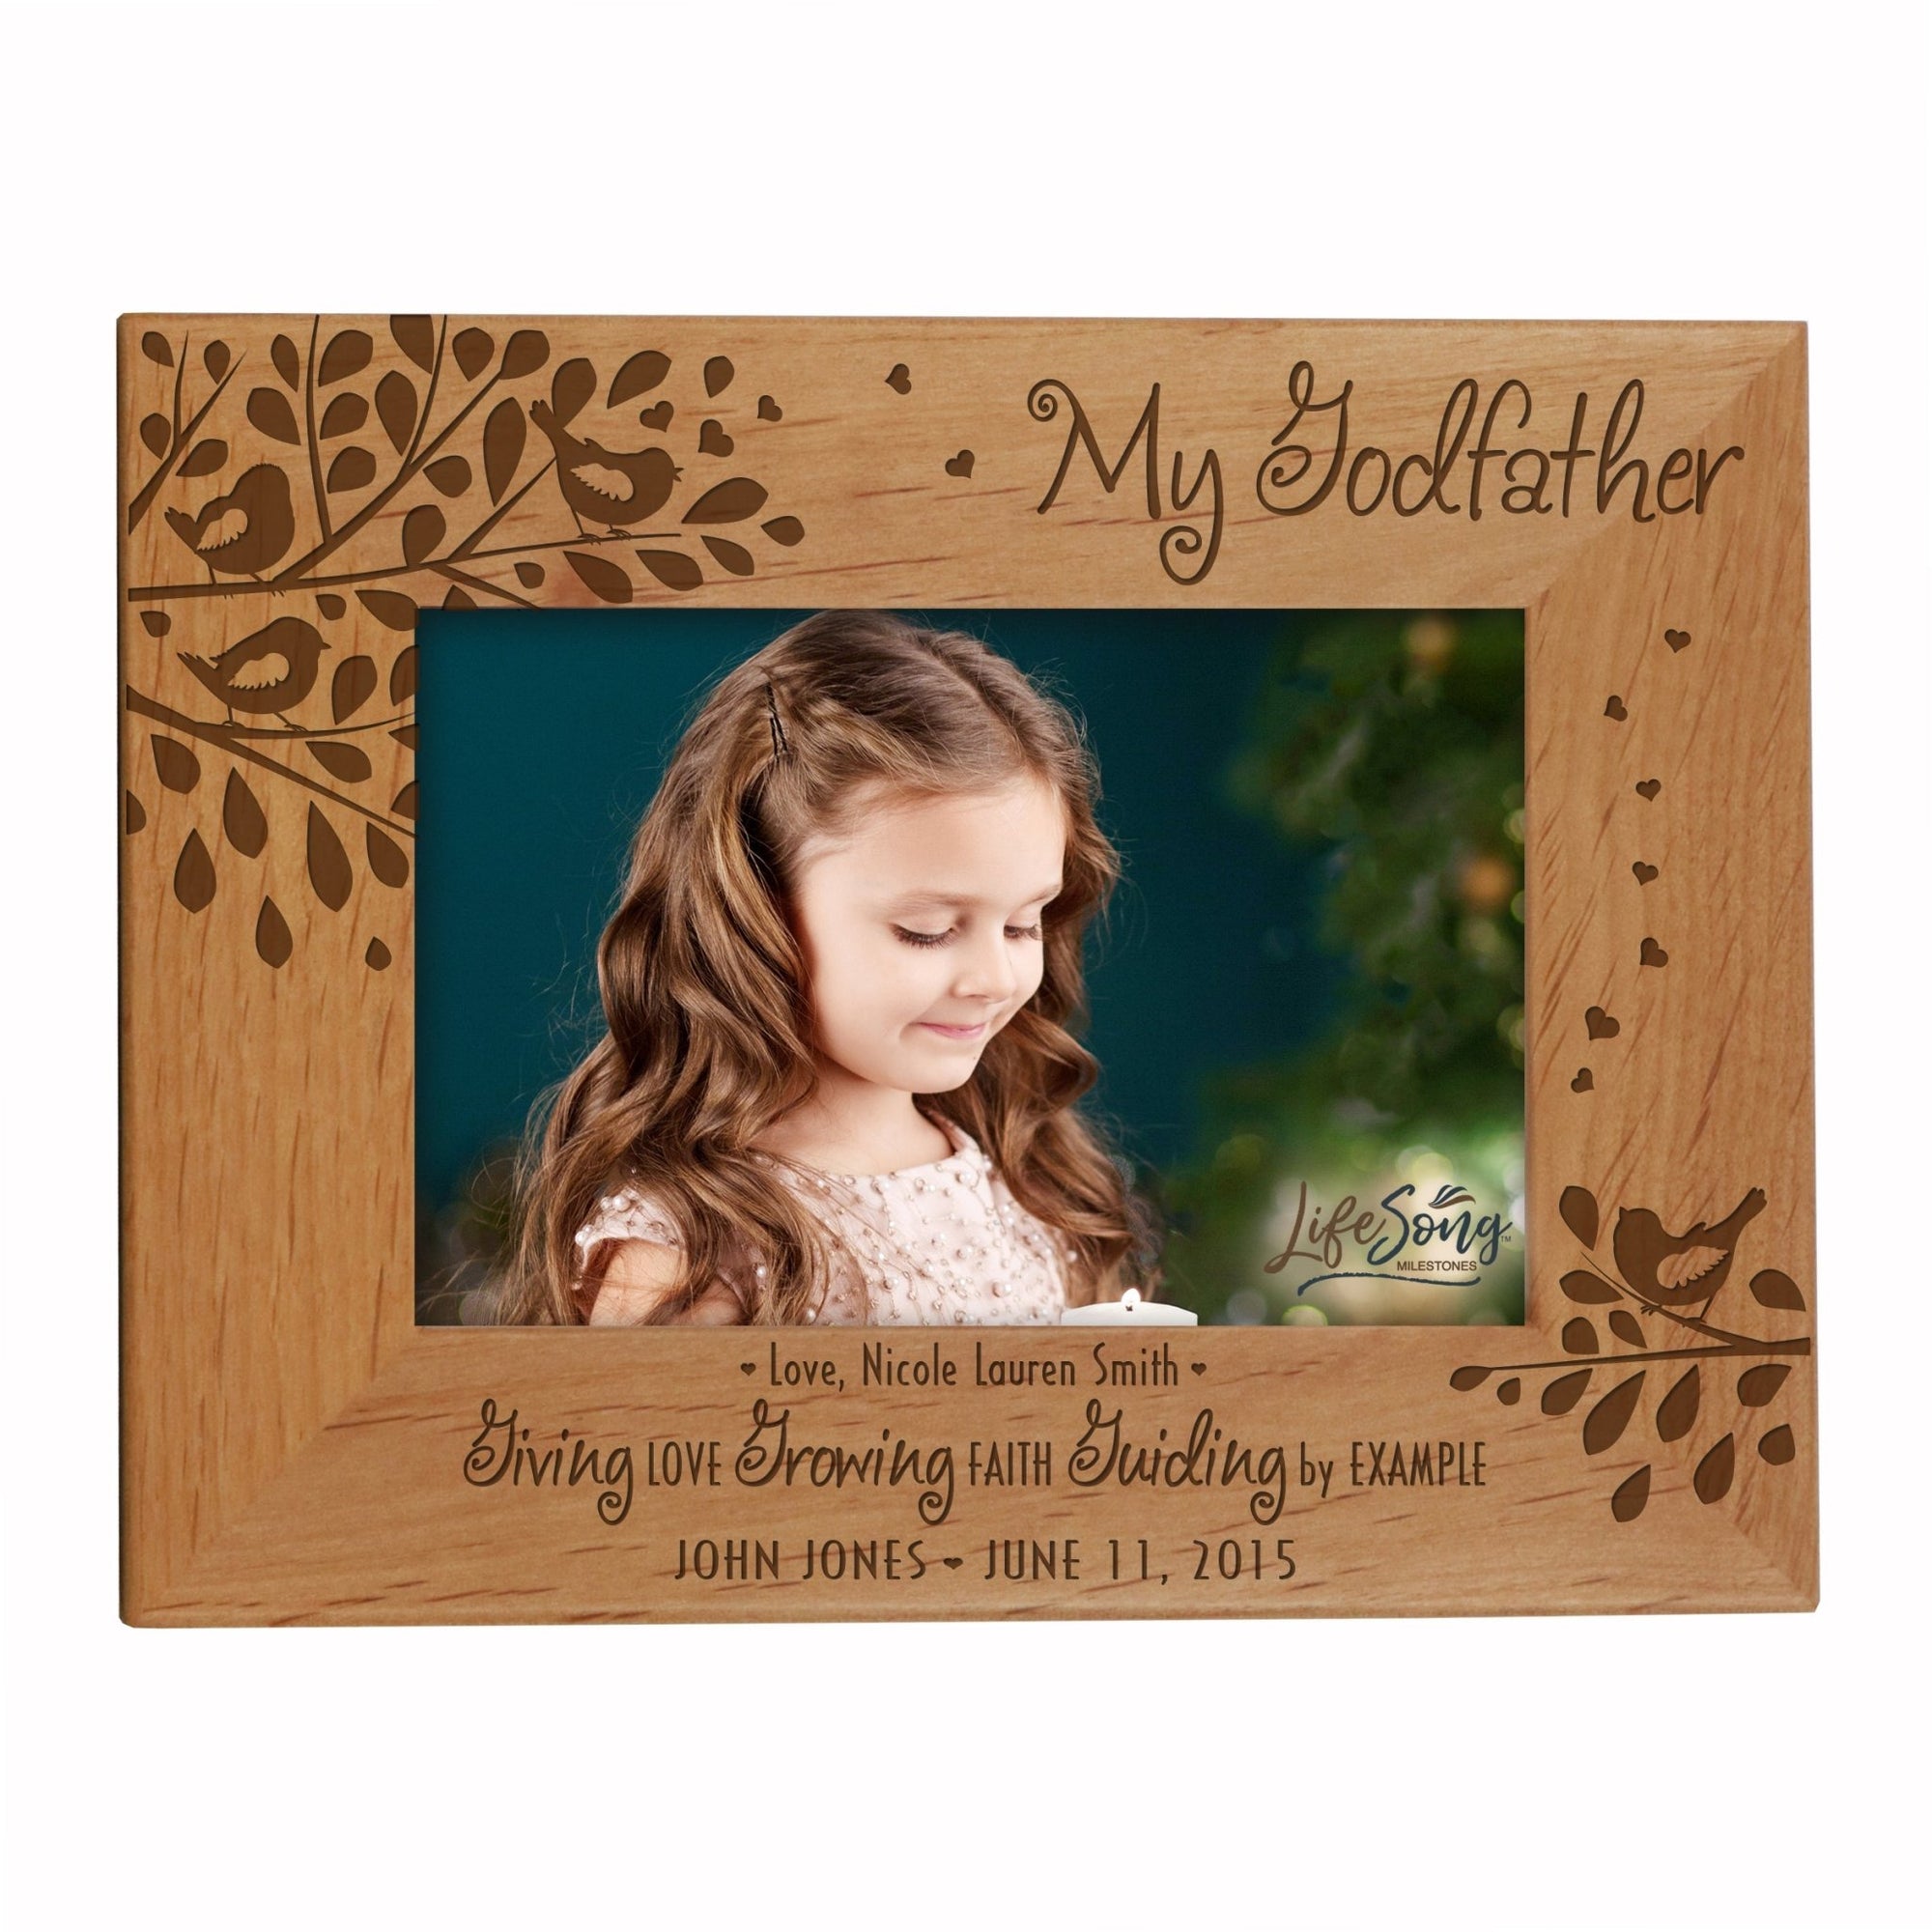 Personalized Baptism Alder Godchildren Photo Frames - My Godfather - LifeSong Milestones